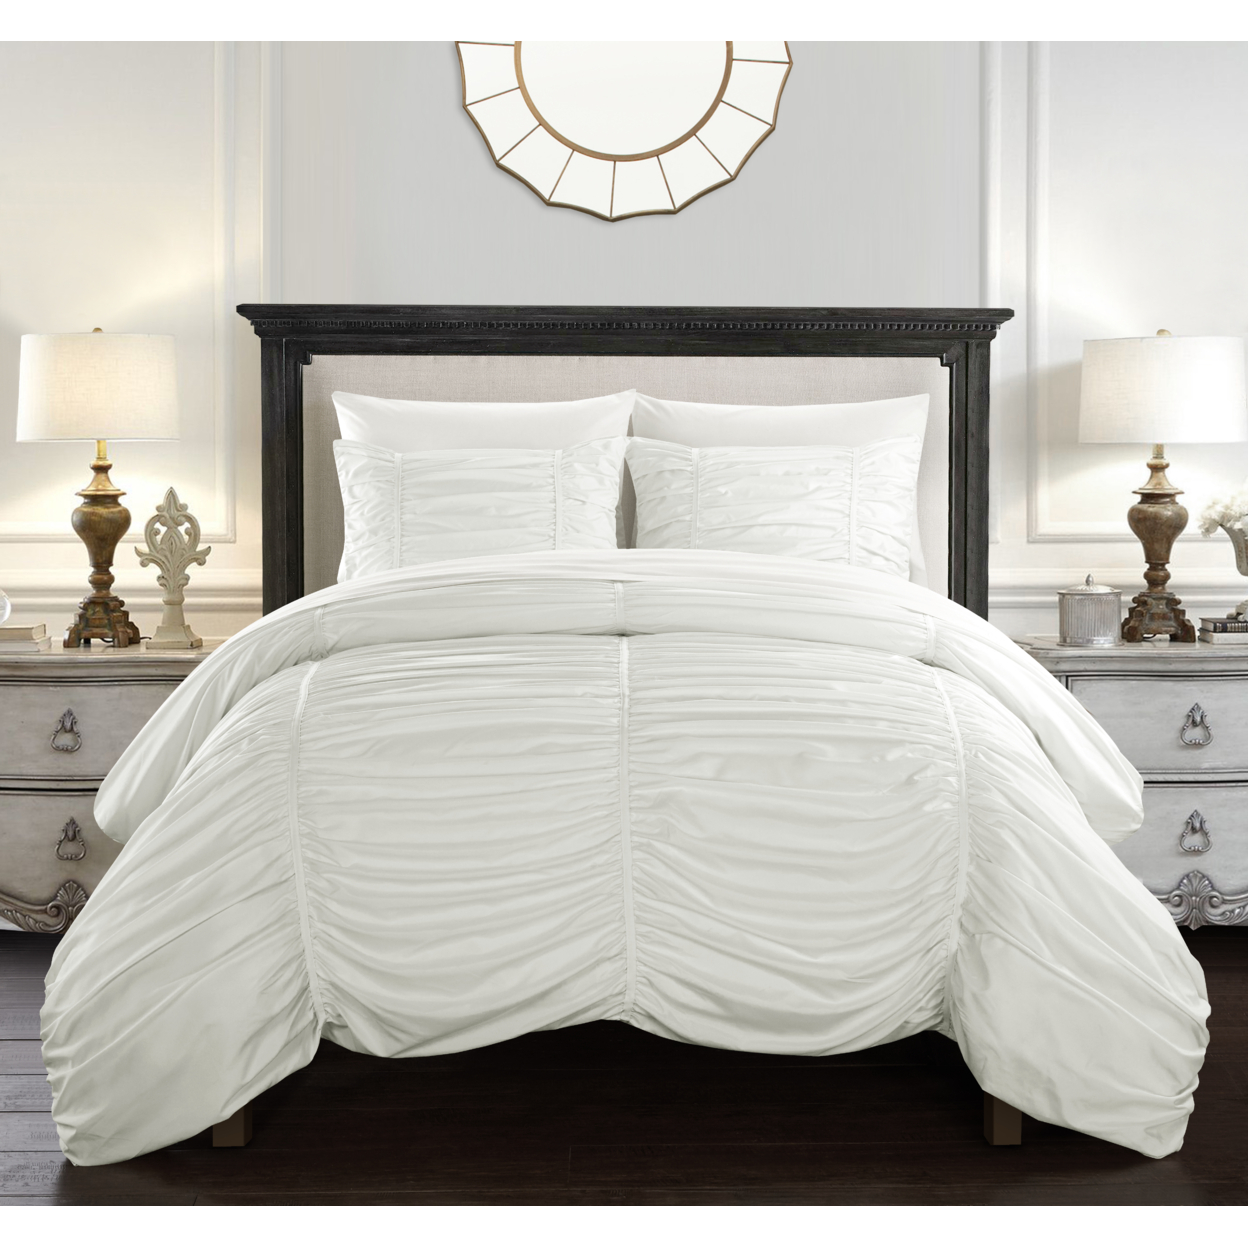 Kiela 2 Pc Or 3 Pc Ruched Comforter Set - White, Twin